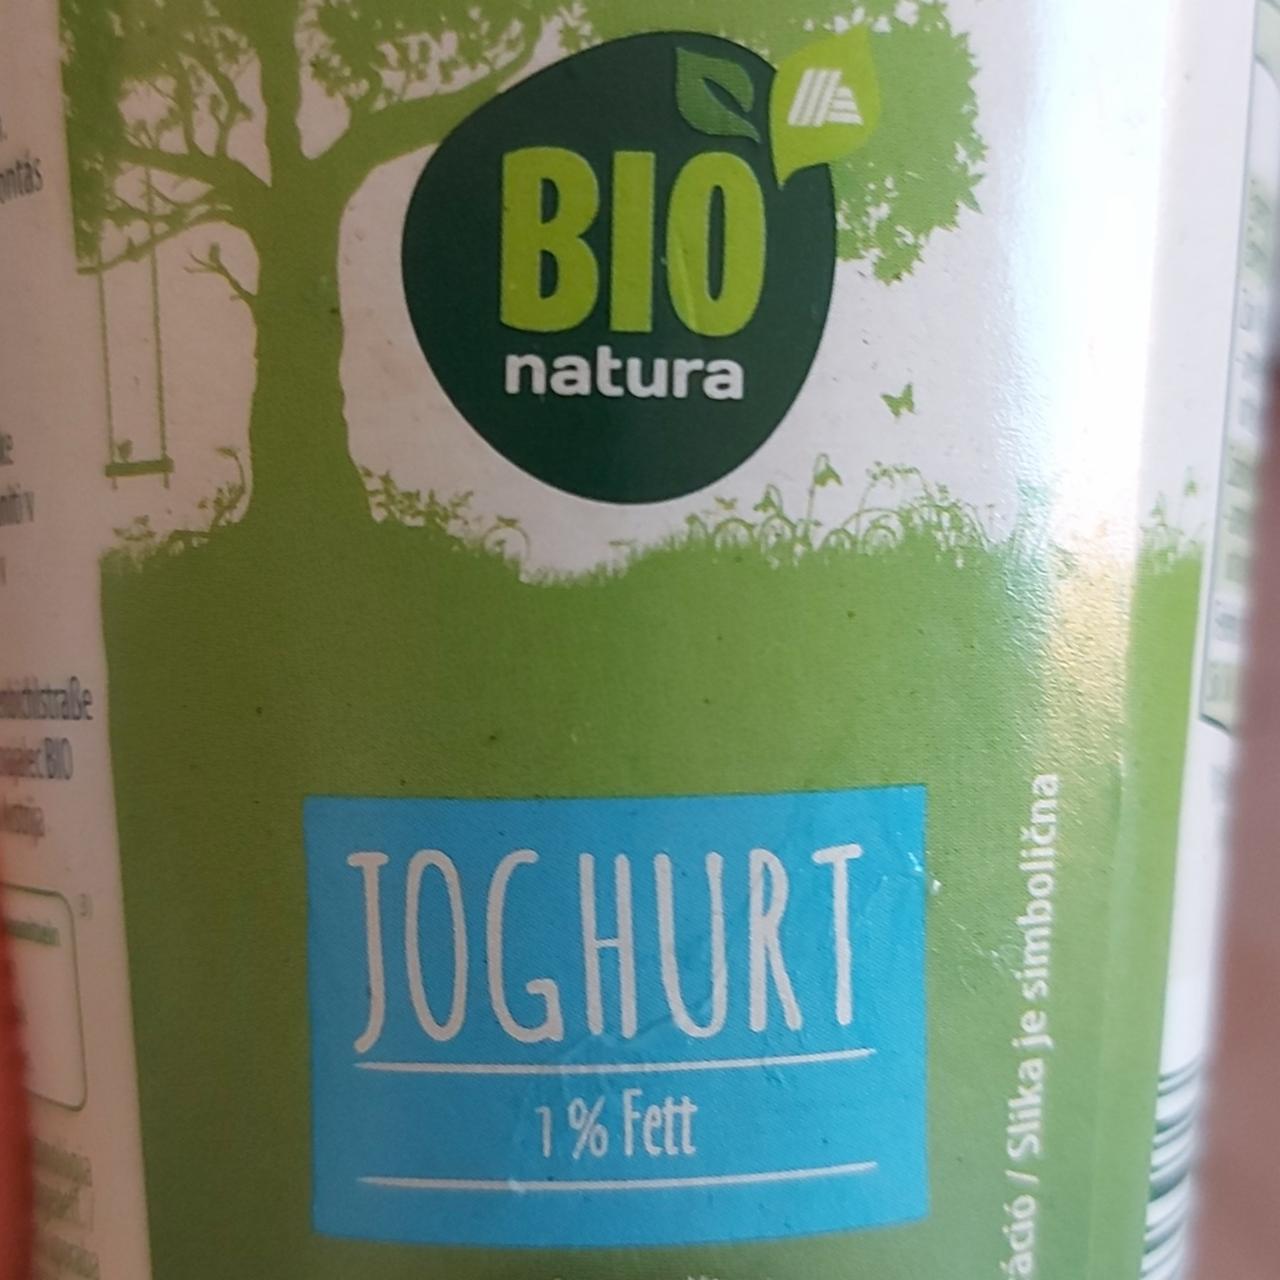 Fotografie - Joghurt 1% fett Bio natura